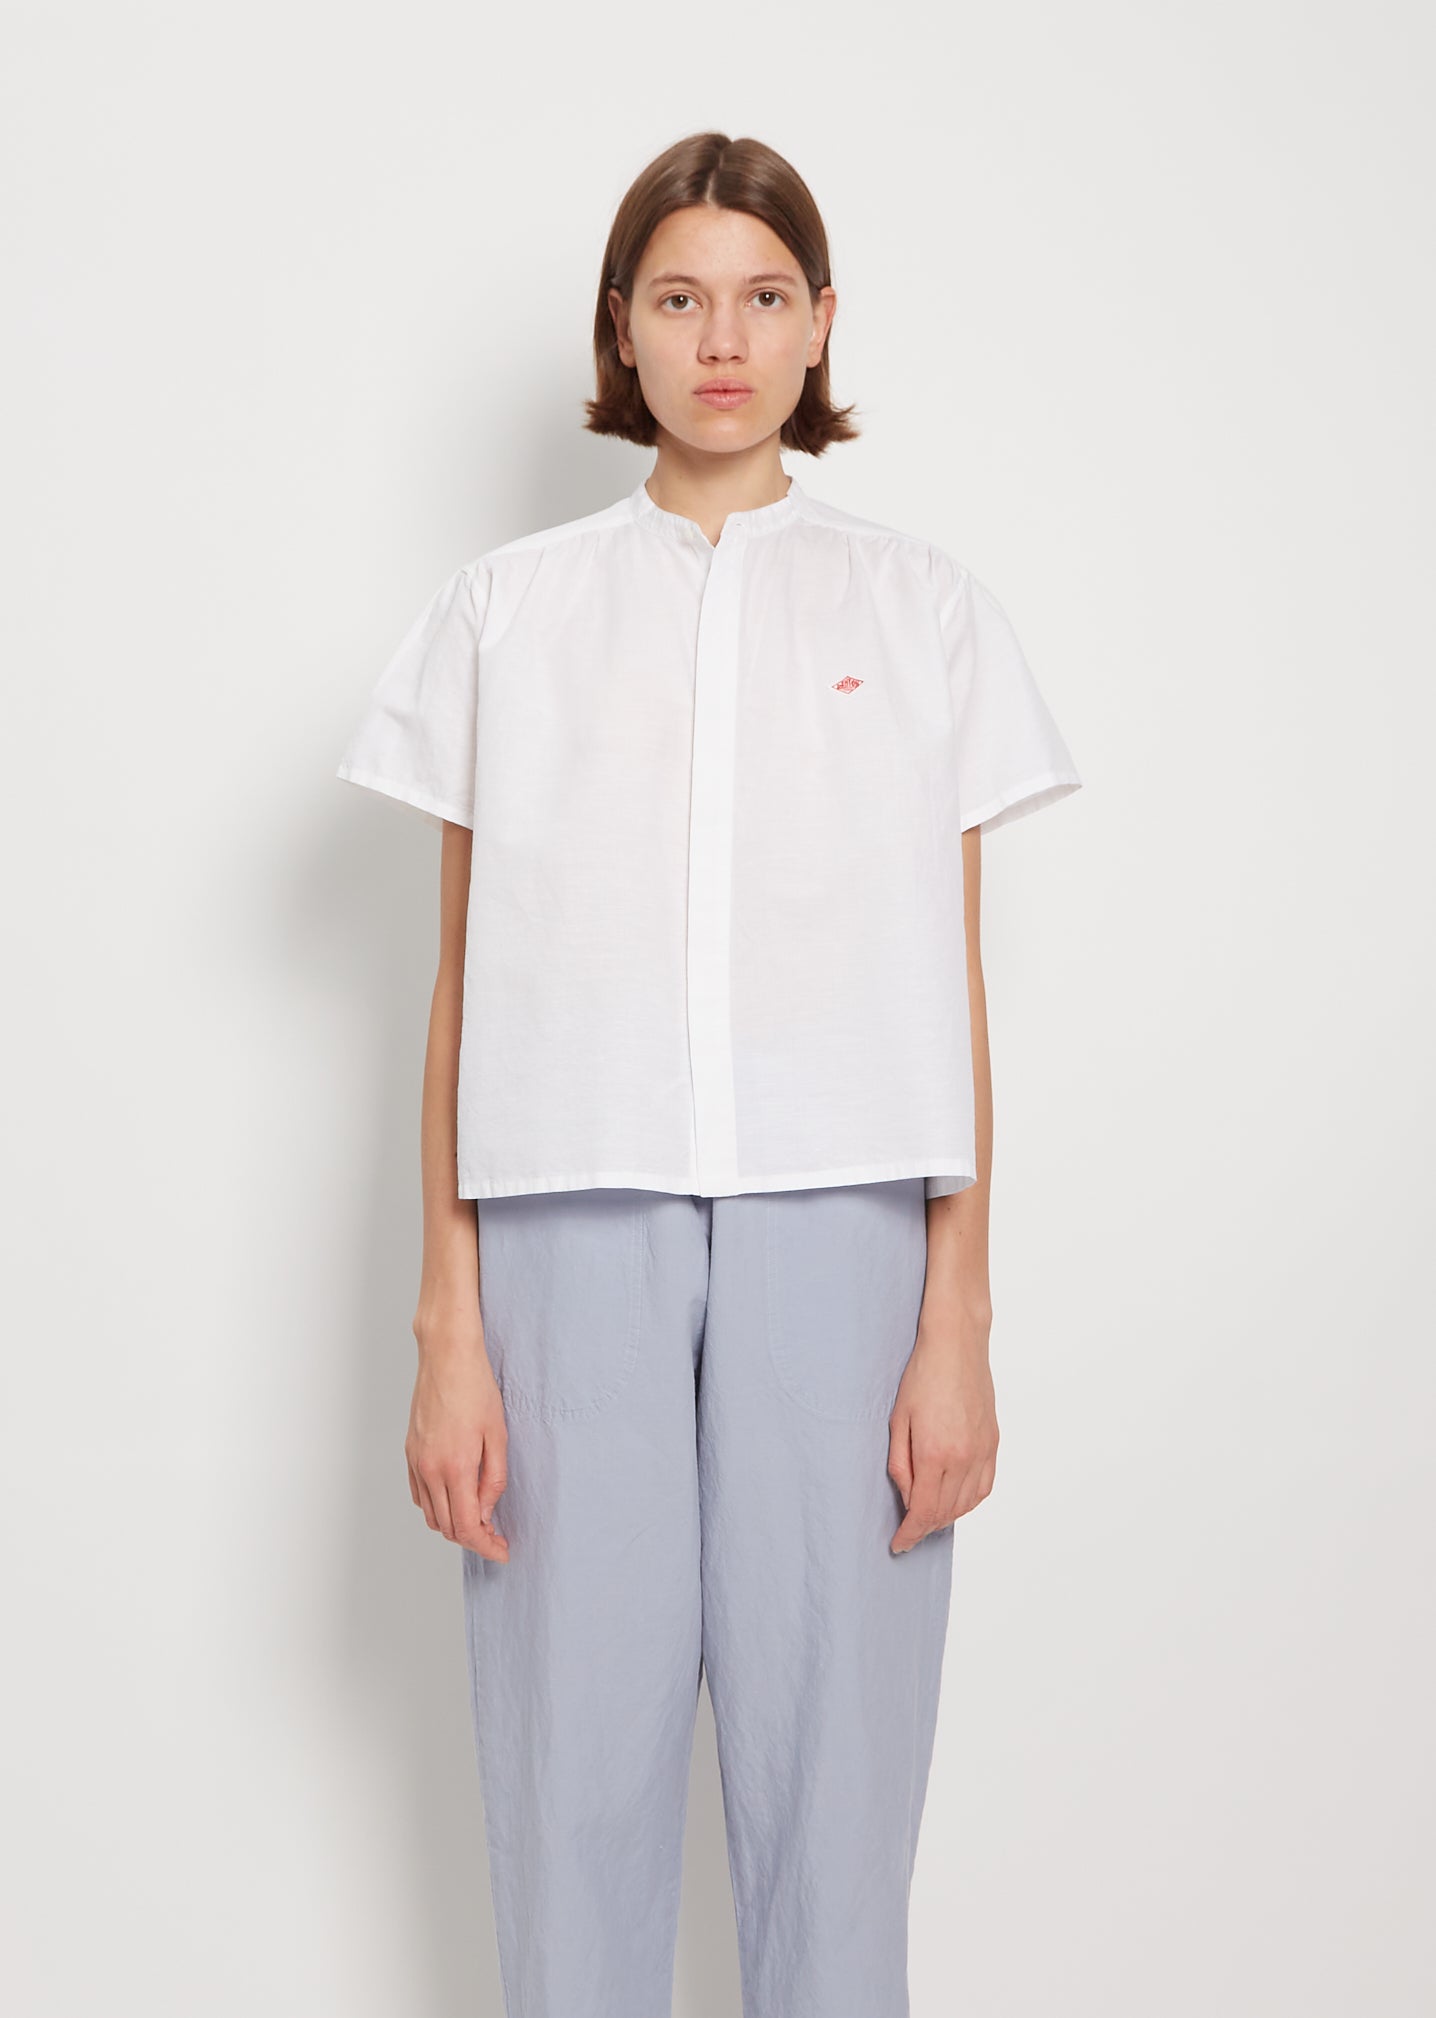 Women's Mandarin Collar White Shirt